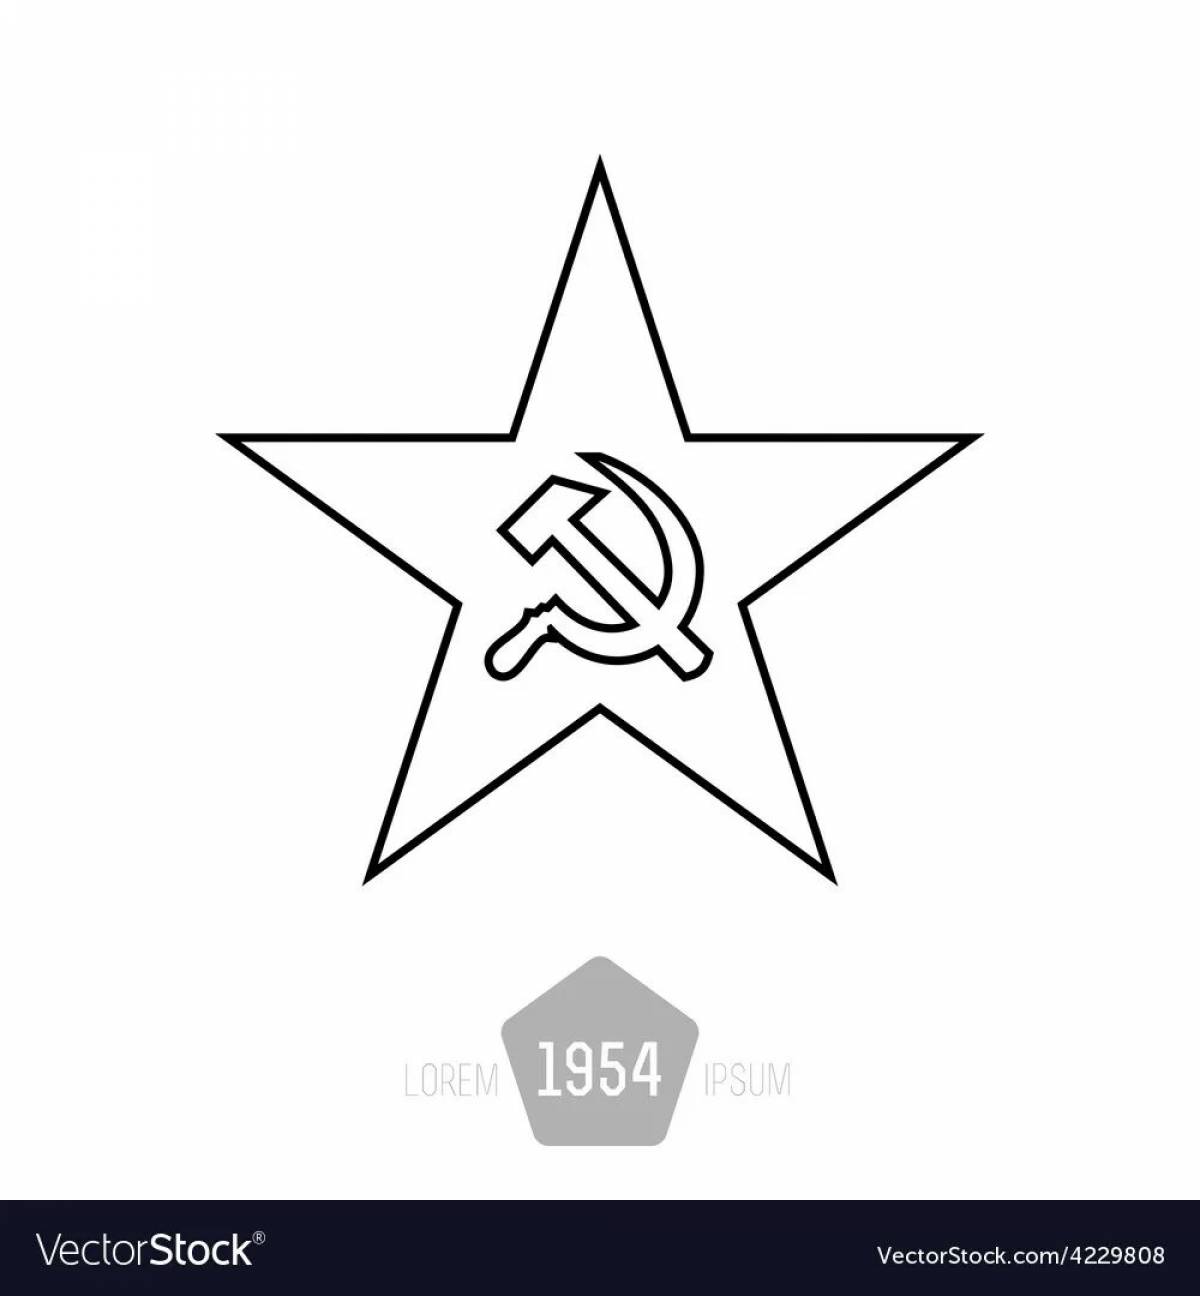 USSR star #2